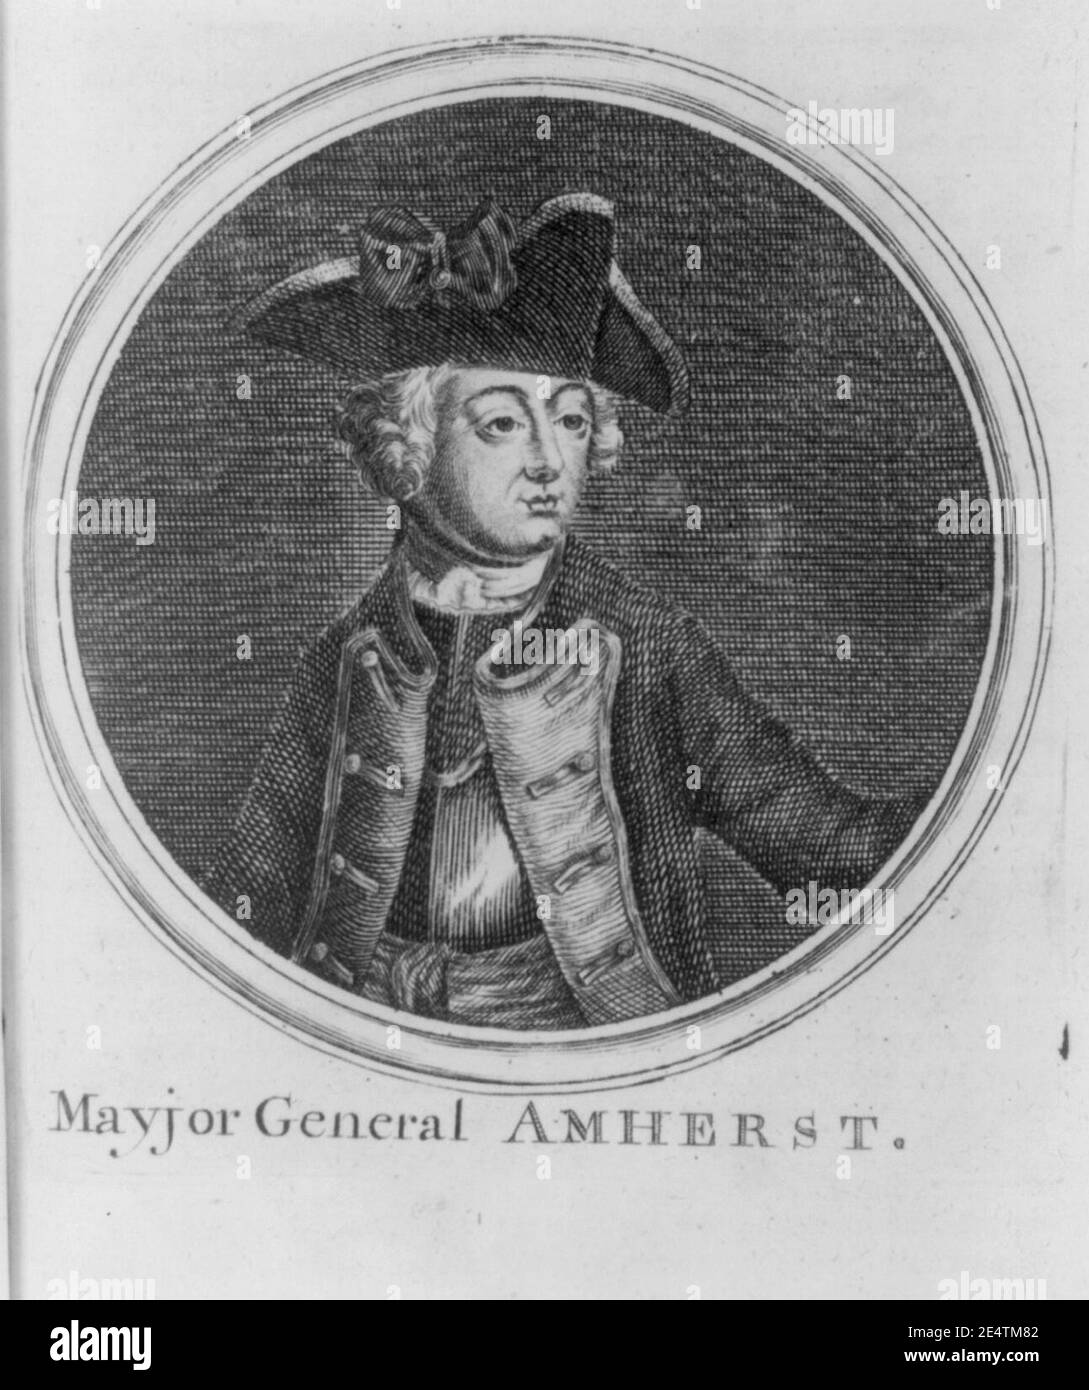 Mayjor General Amherst Stock Photo